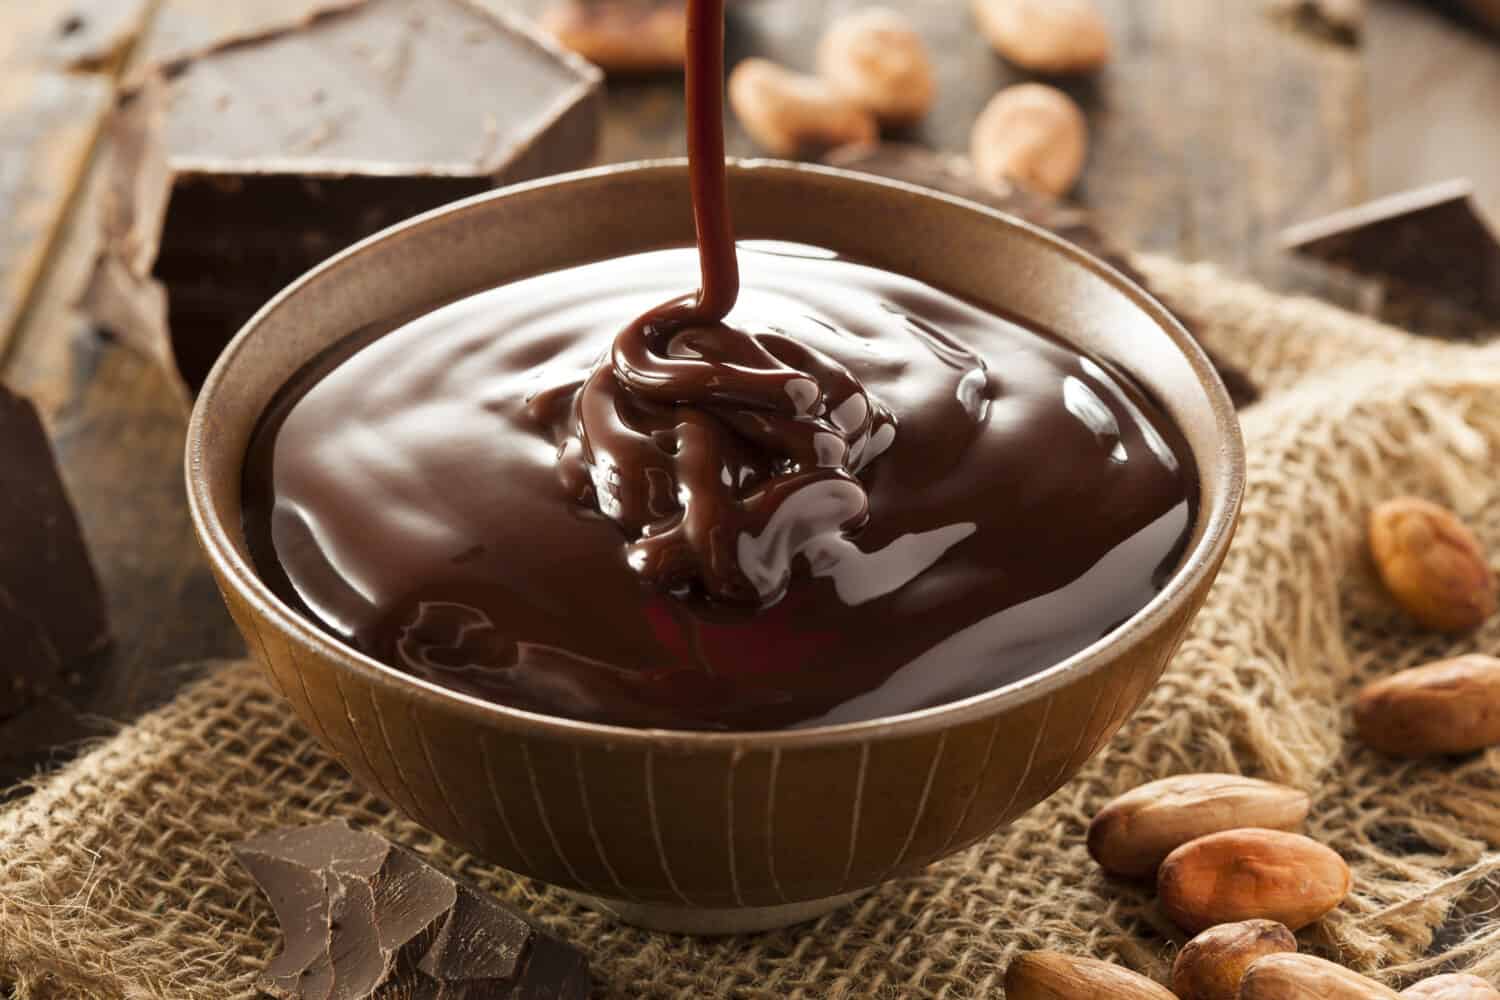 Sweet Dark Chocolate Sauce in a Bowl